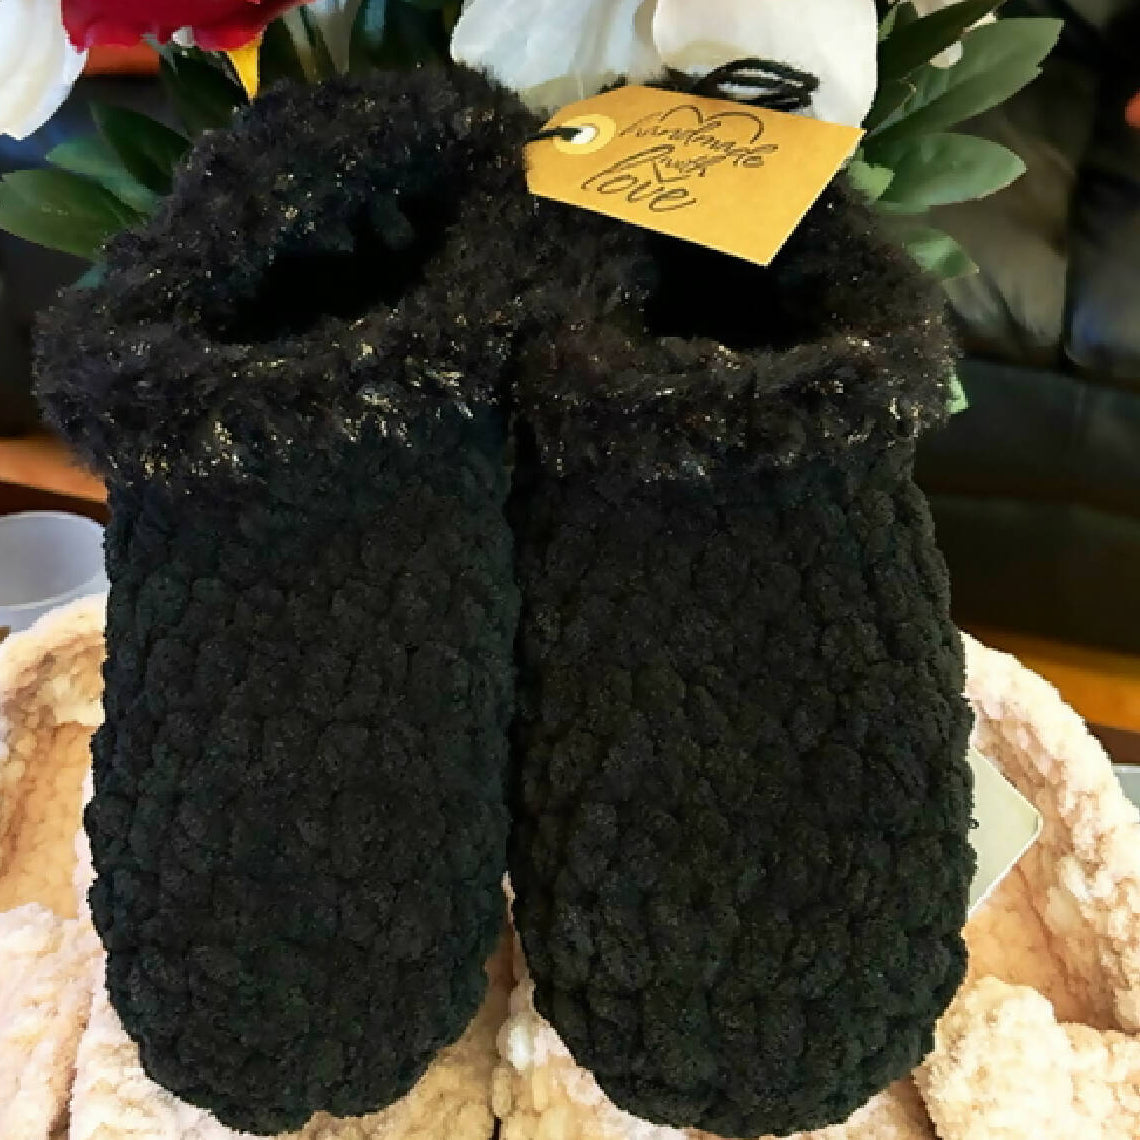 Black bootie with fur women's slippers